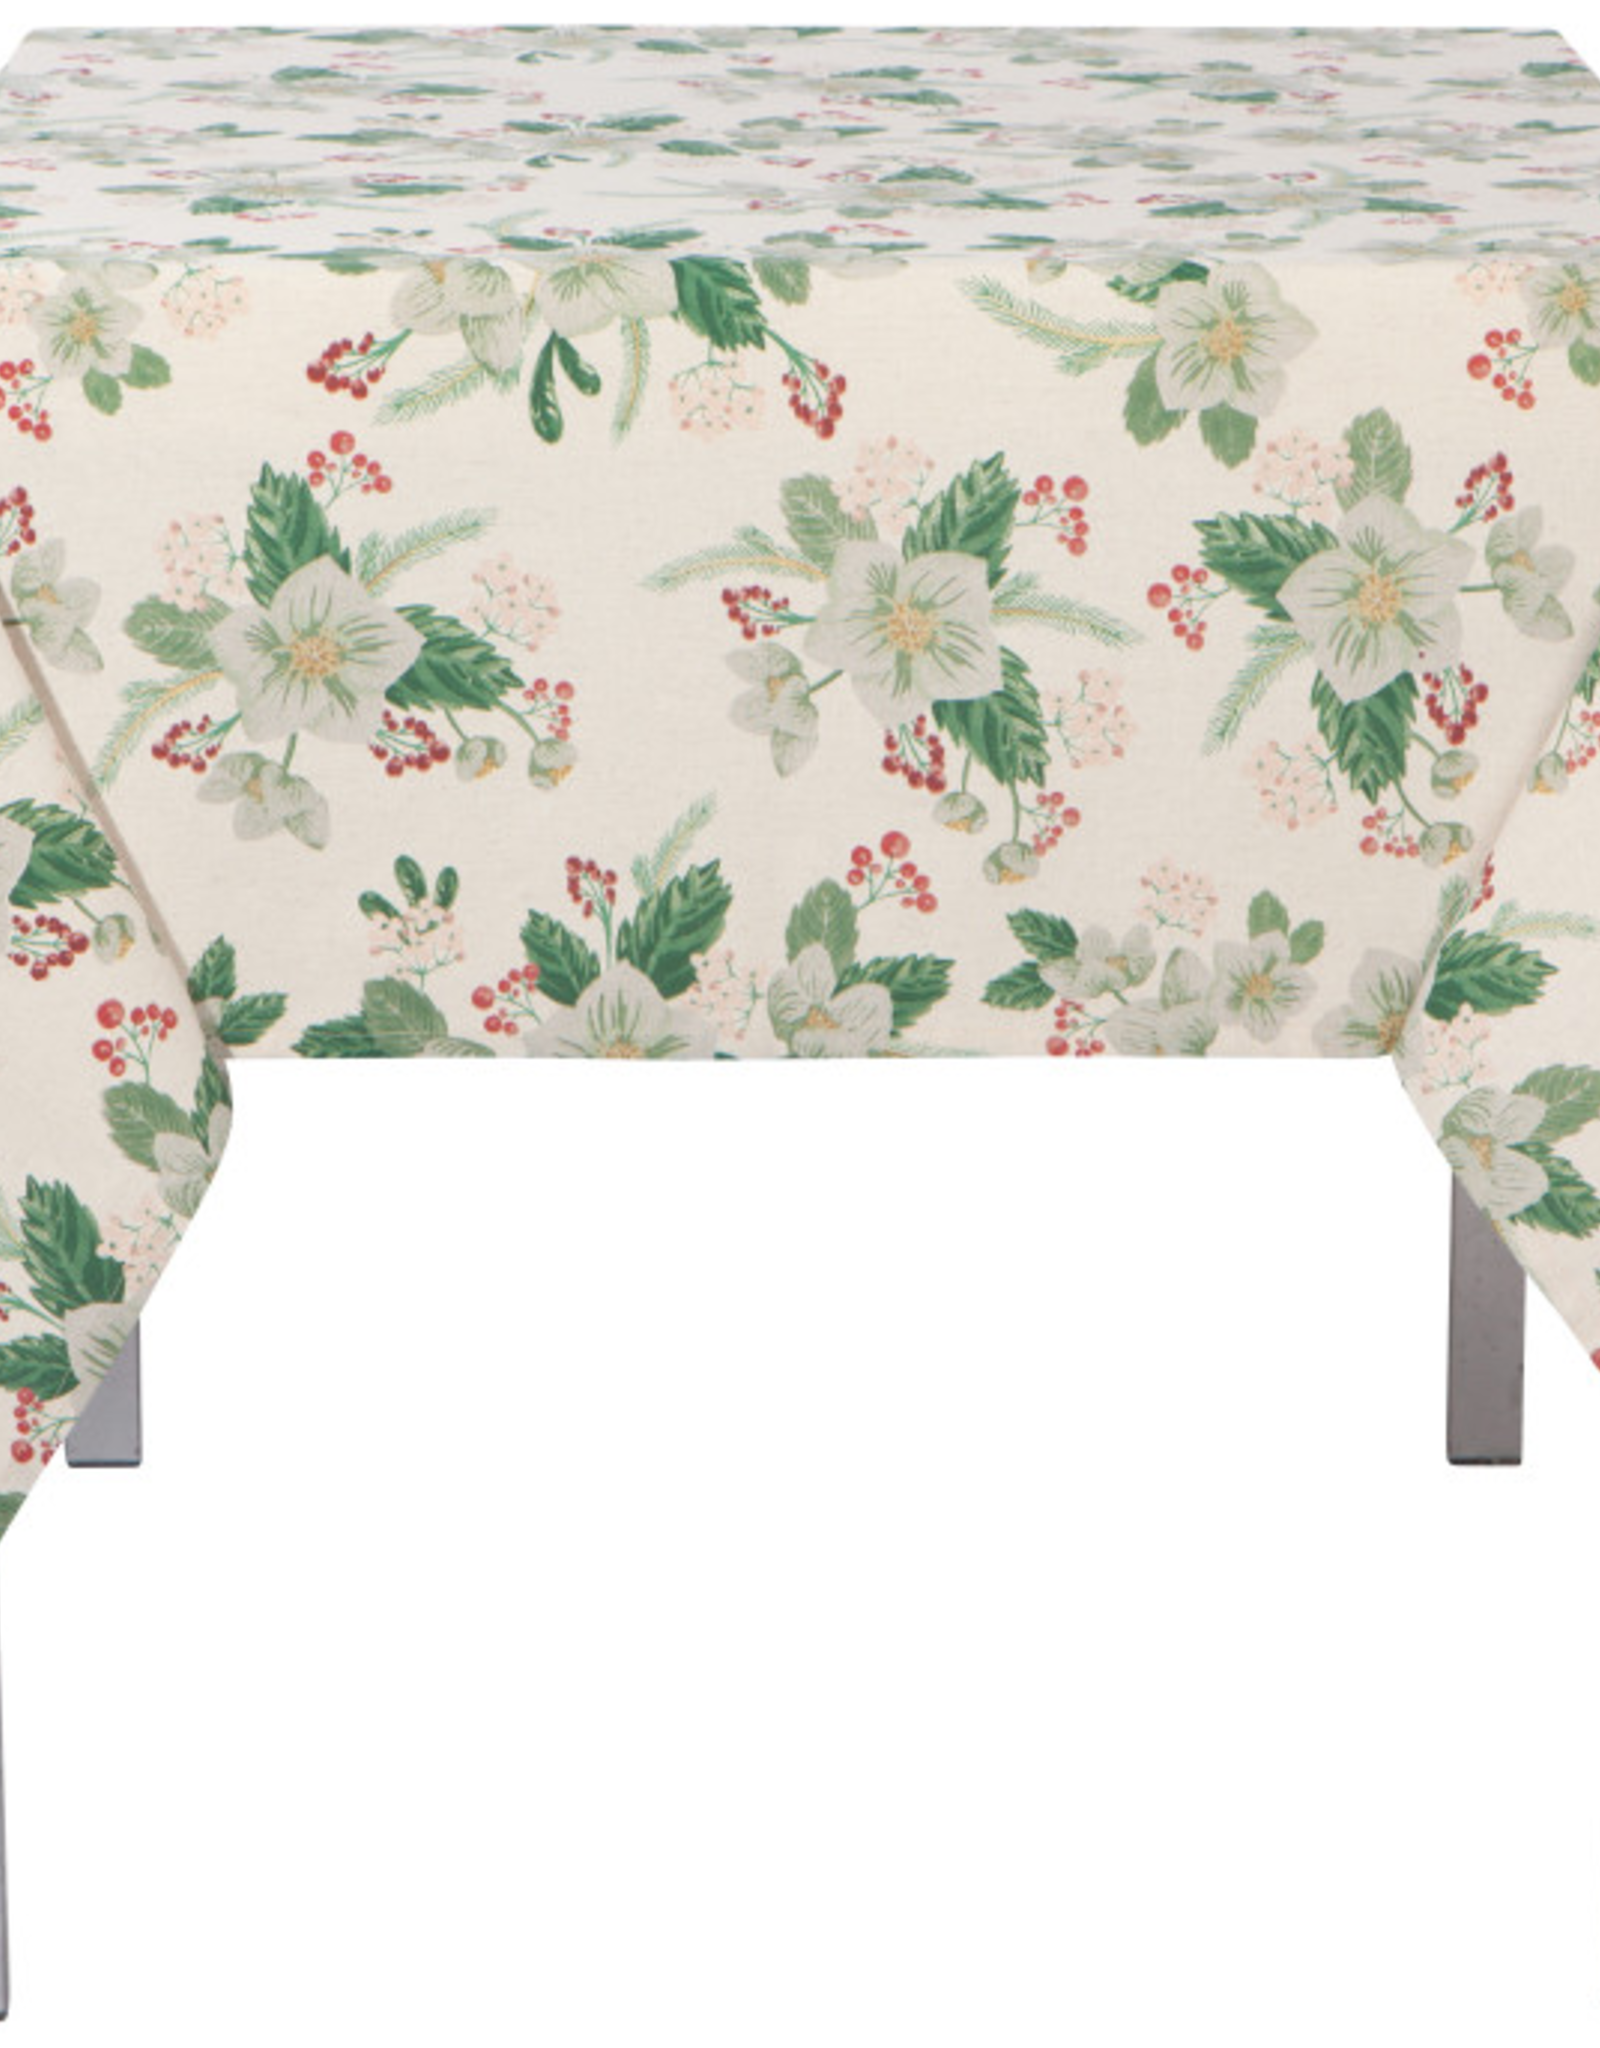 Winterblossom Tablecloth 60x120